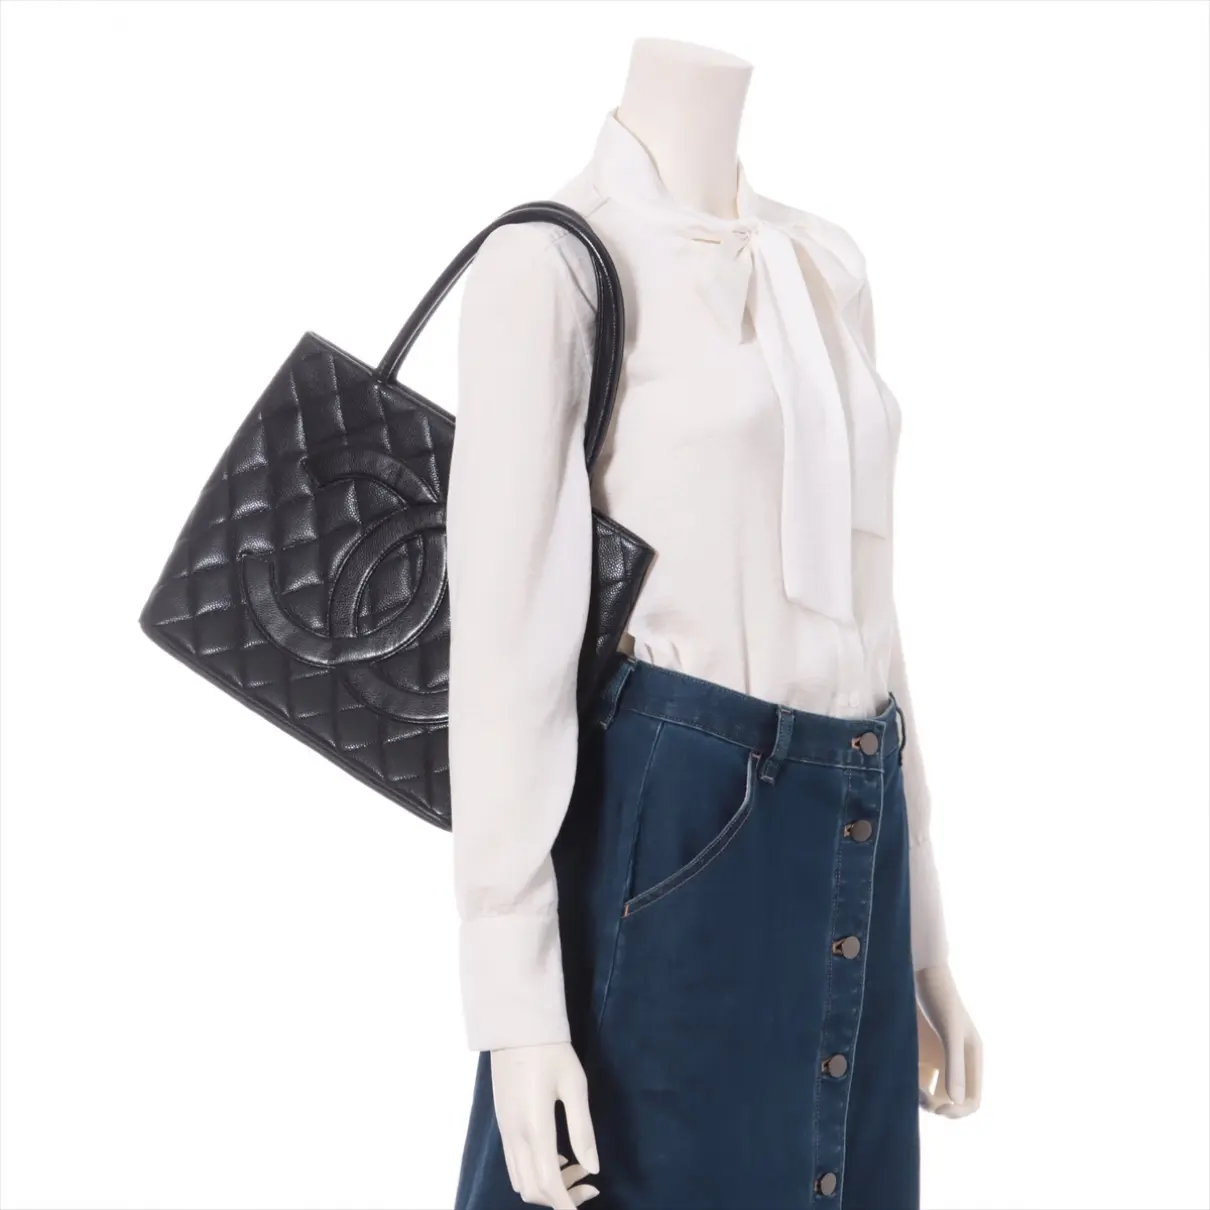 Médaillon leather handbag Chanel - Vintage